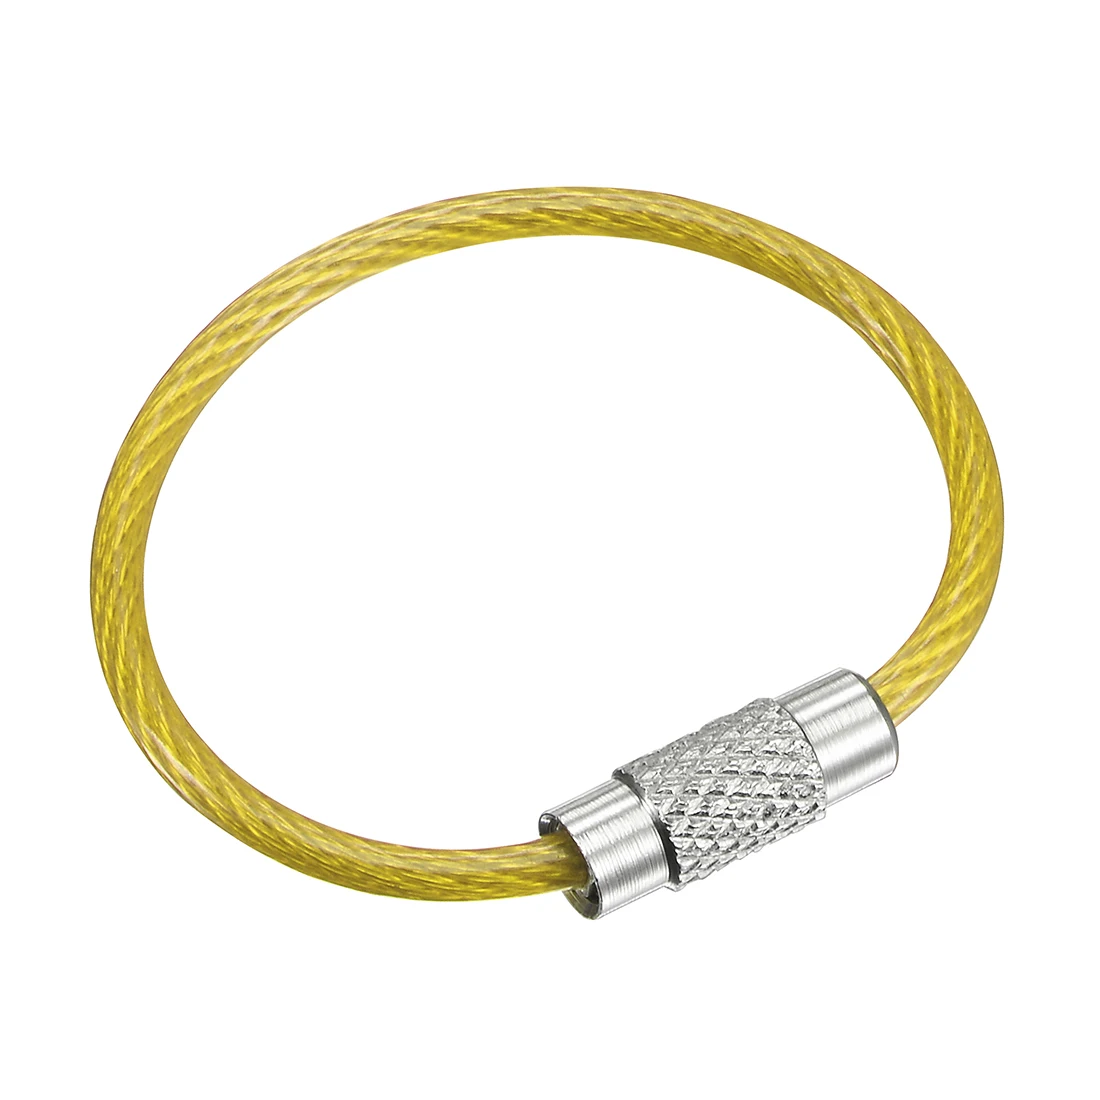 Yuxcell-PVC revestido fio Keychain, Loop cabo para bolsa, colhedor, zíper, aço inoxidável